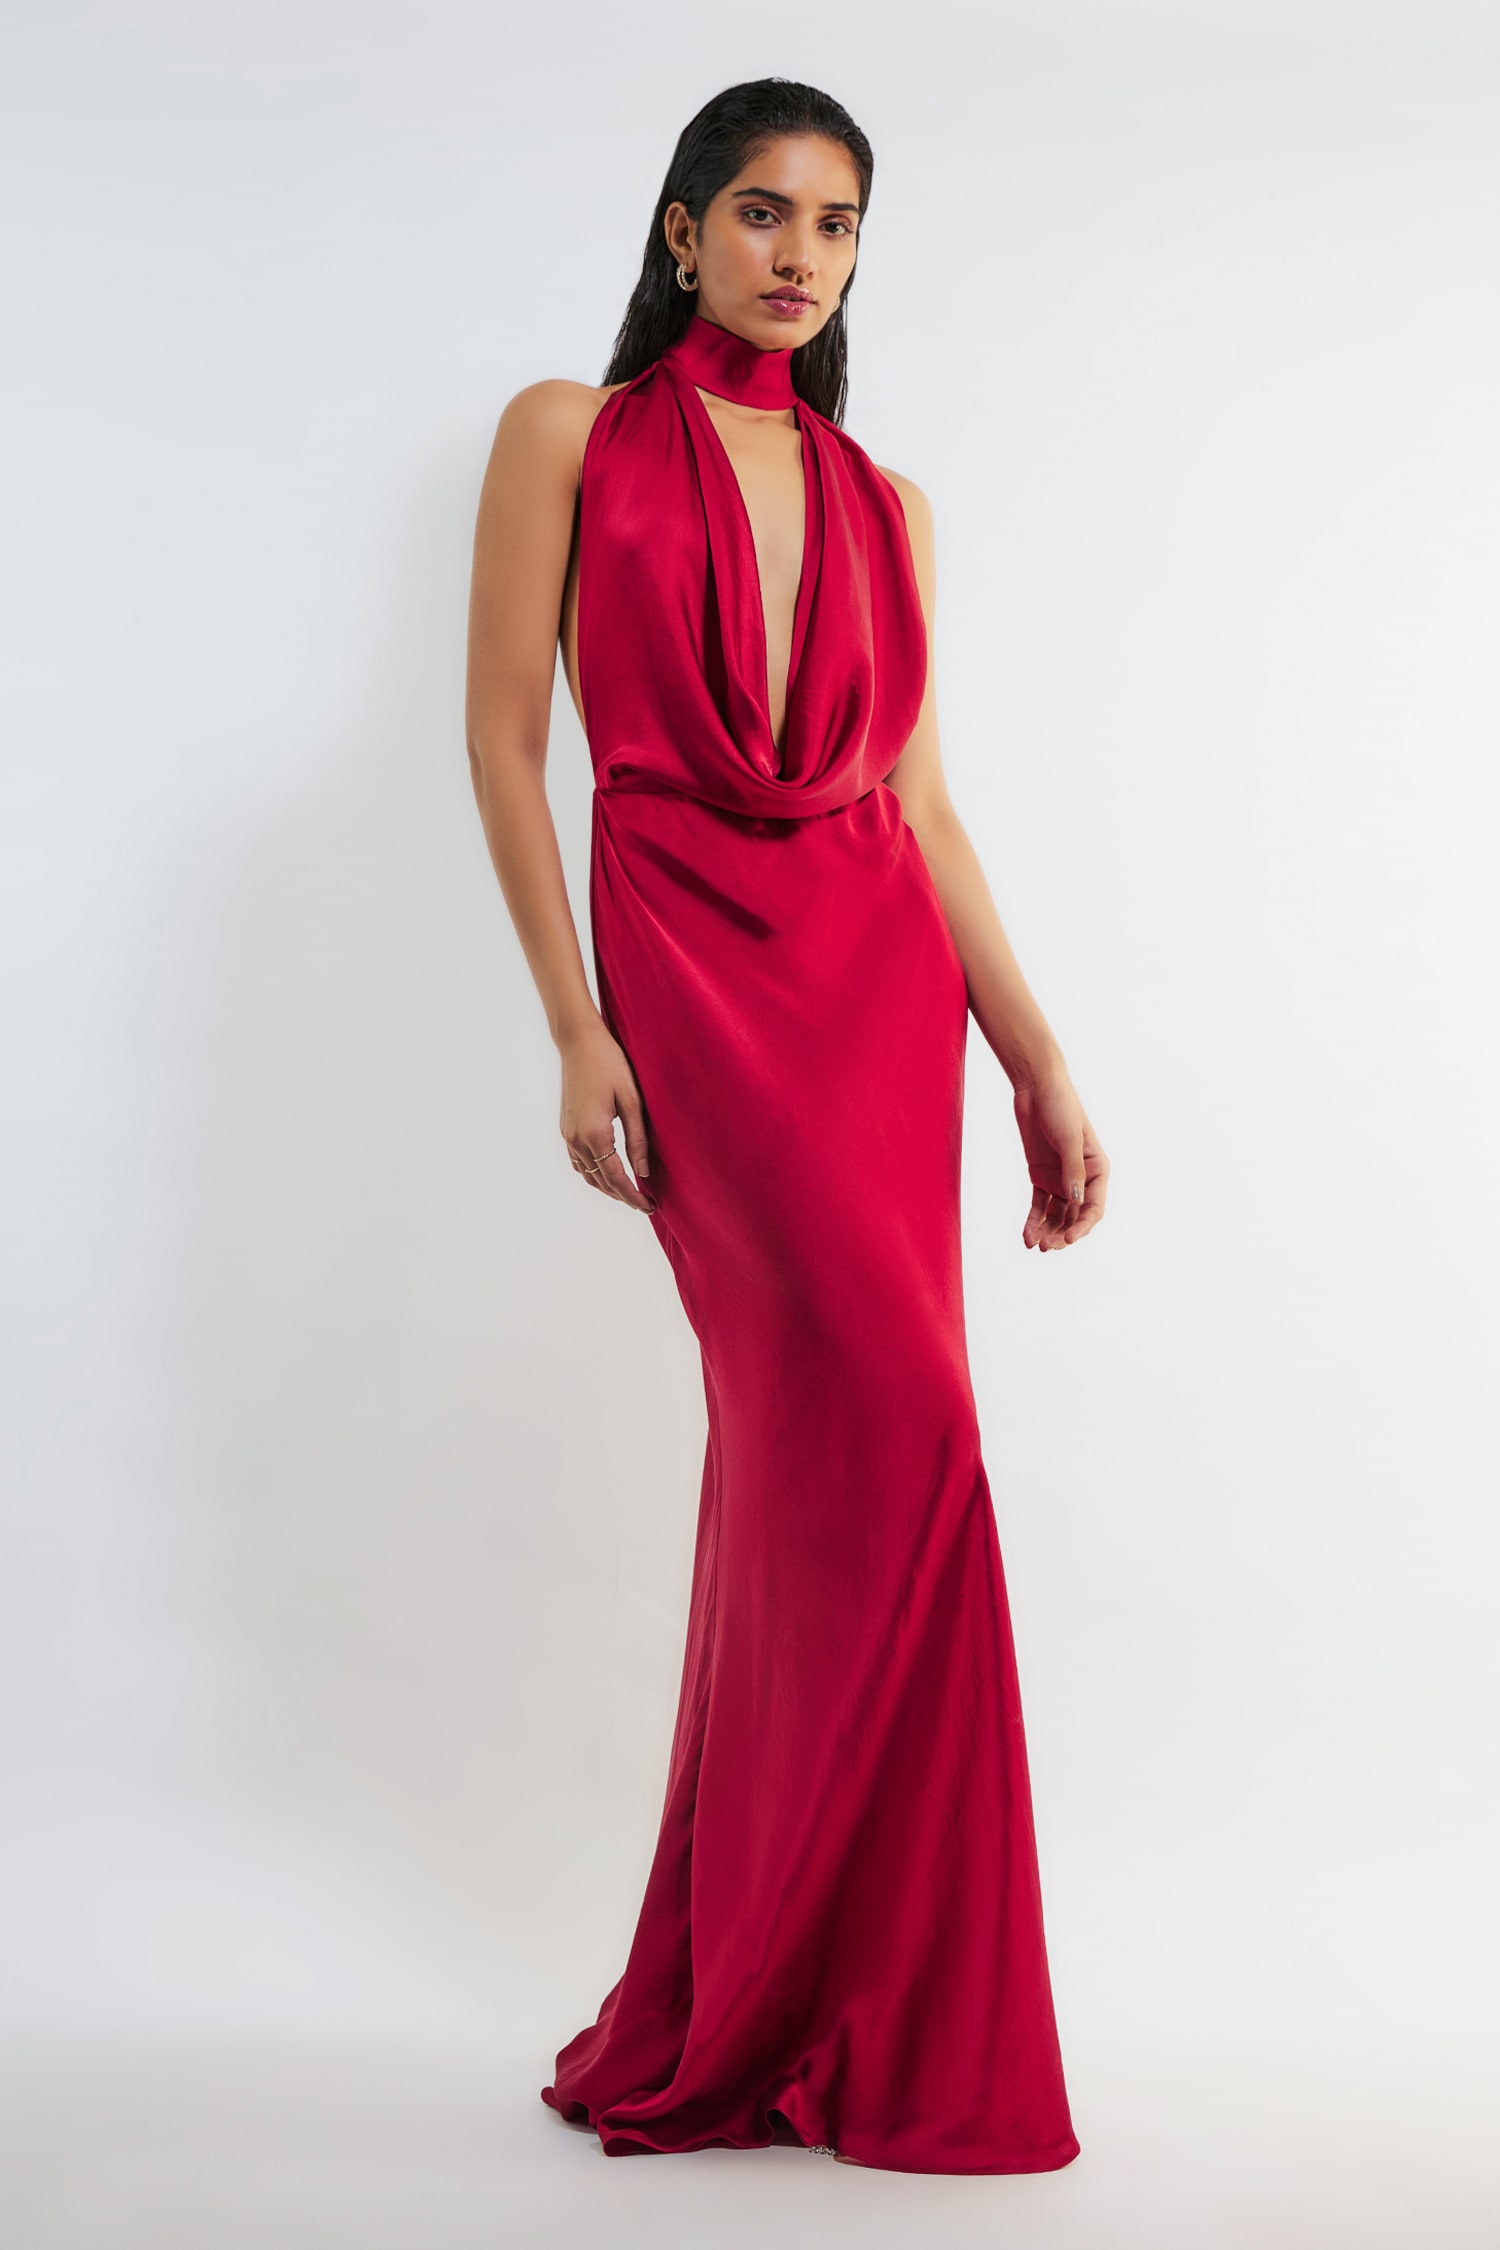 Sherri Hill Cut Out Long Sleeve Dress 55375 – Terry Costa